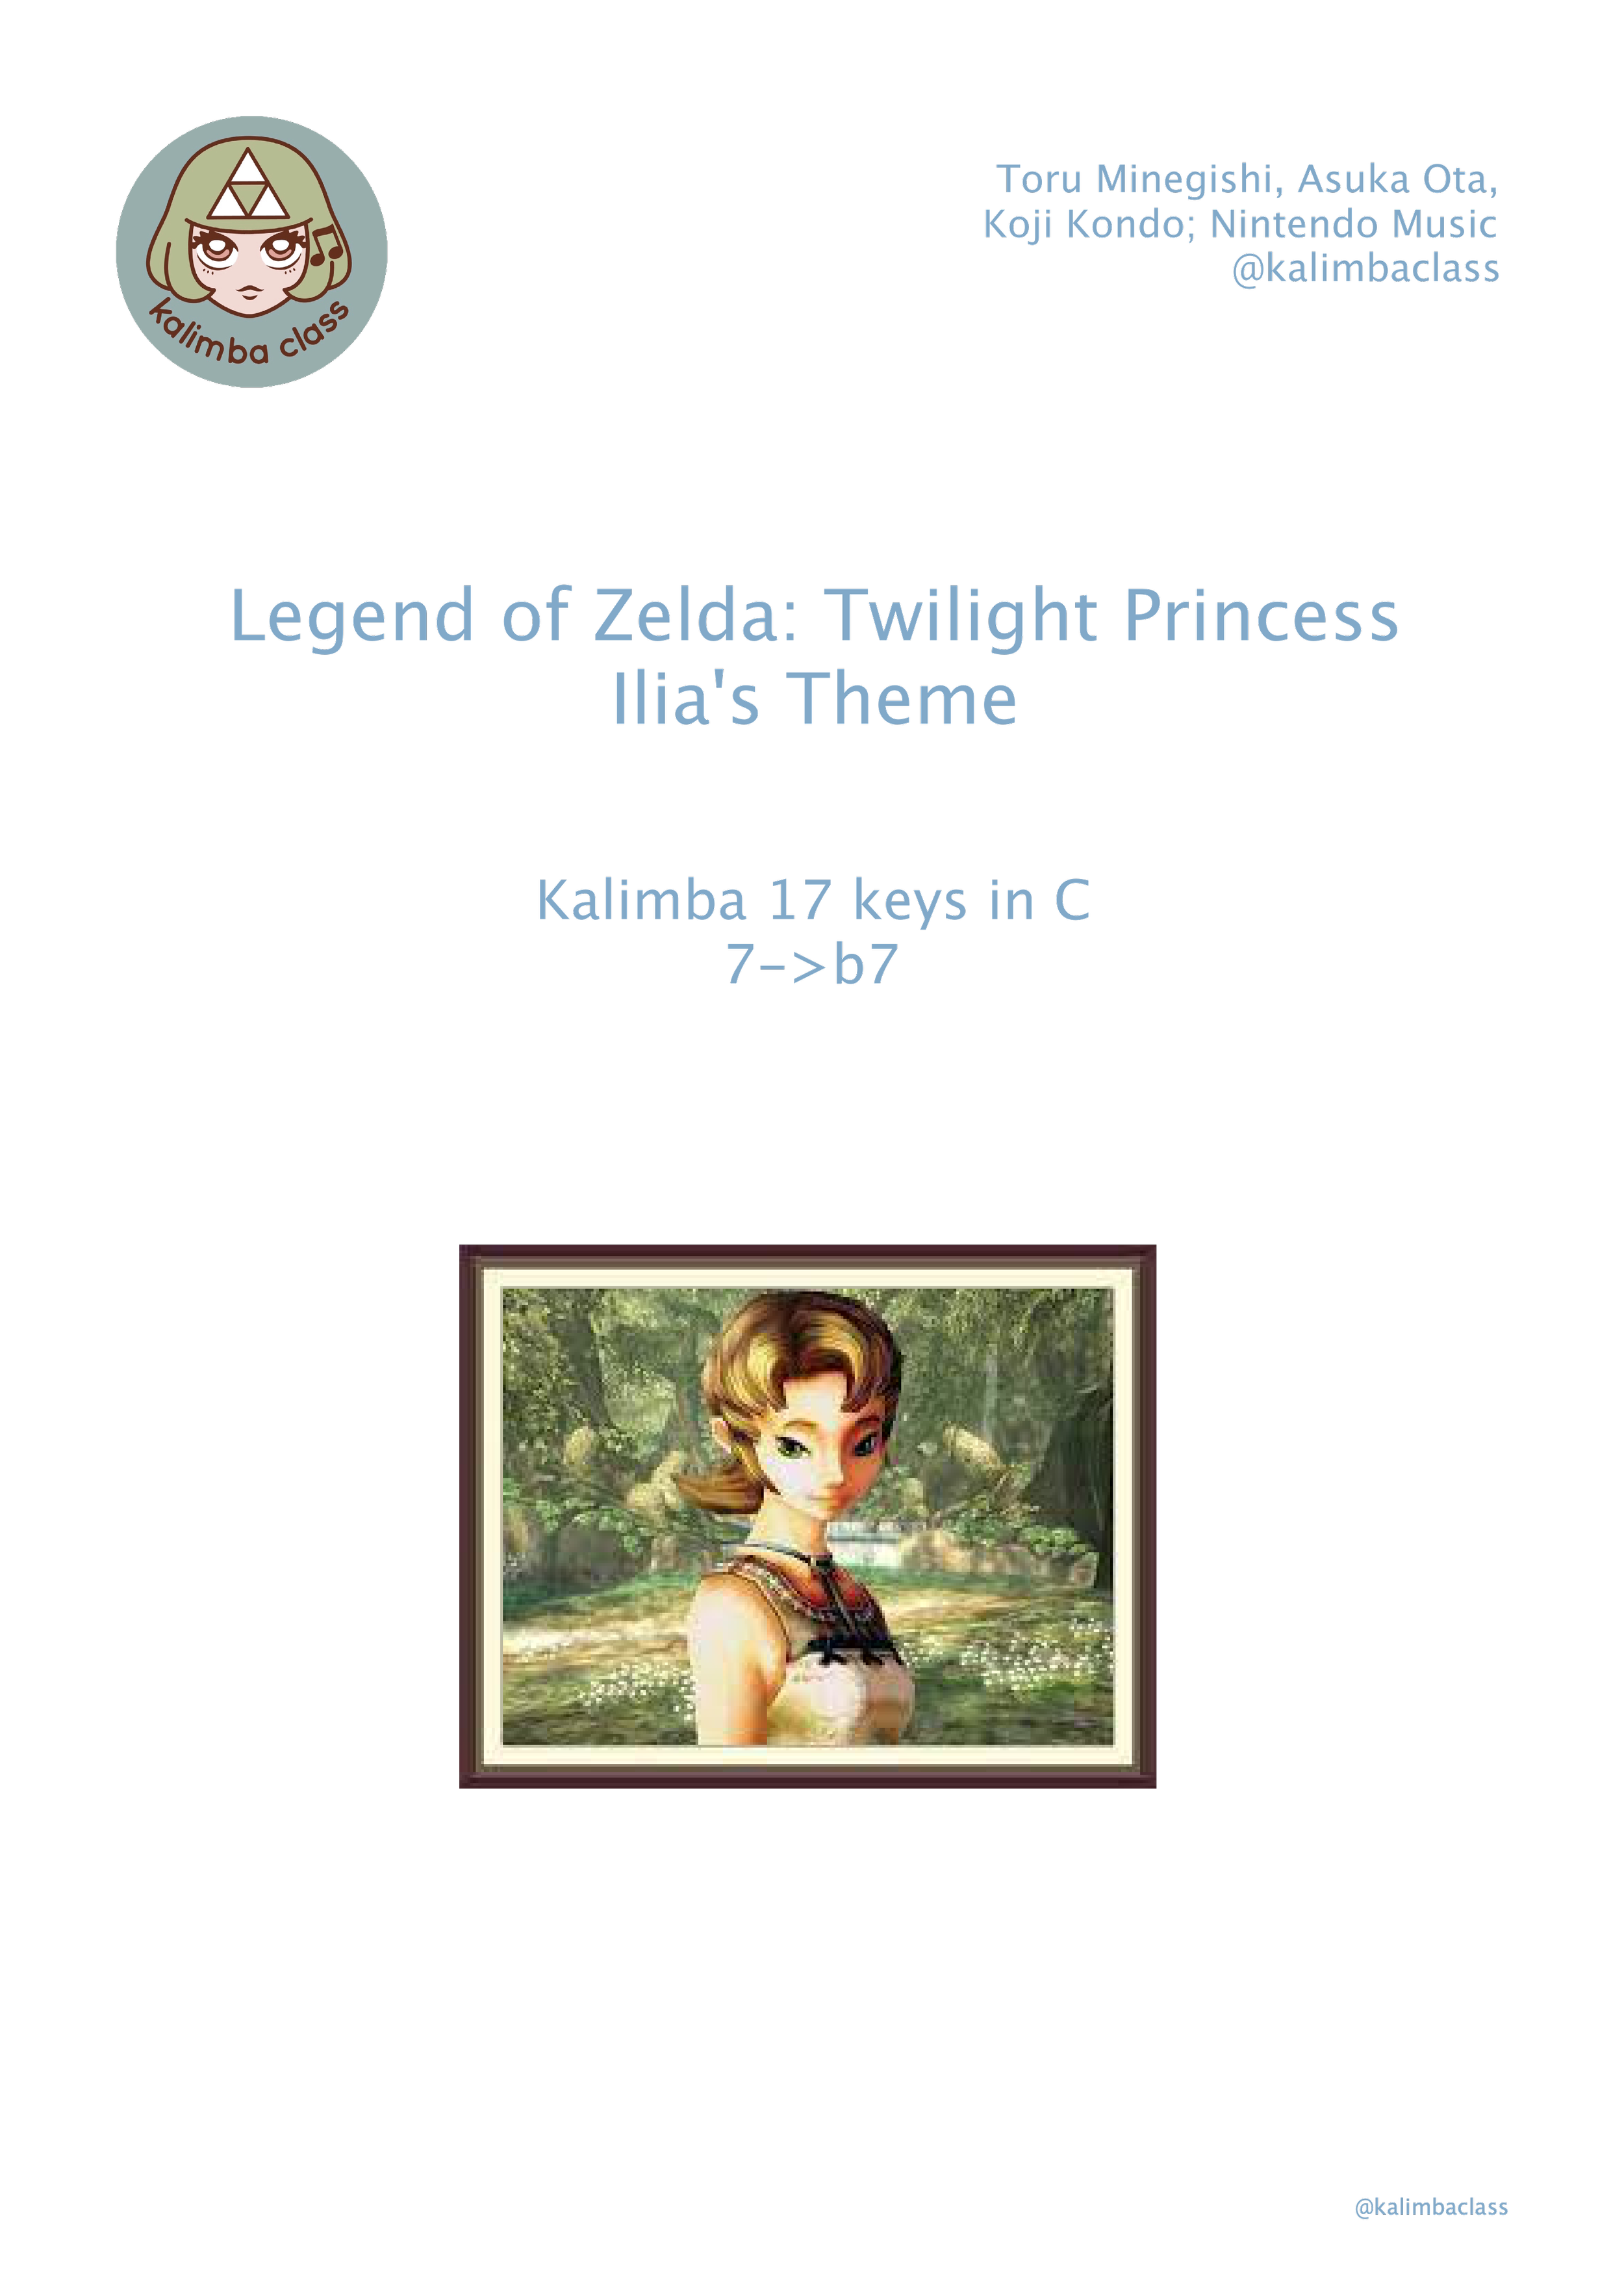 Ilia's Theme, The Legend of Zelda: Twilight Princess 